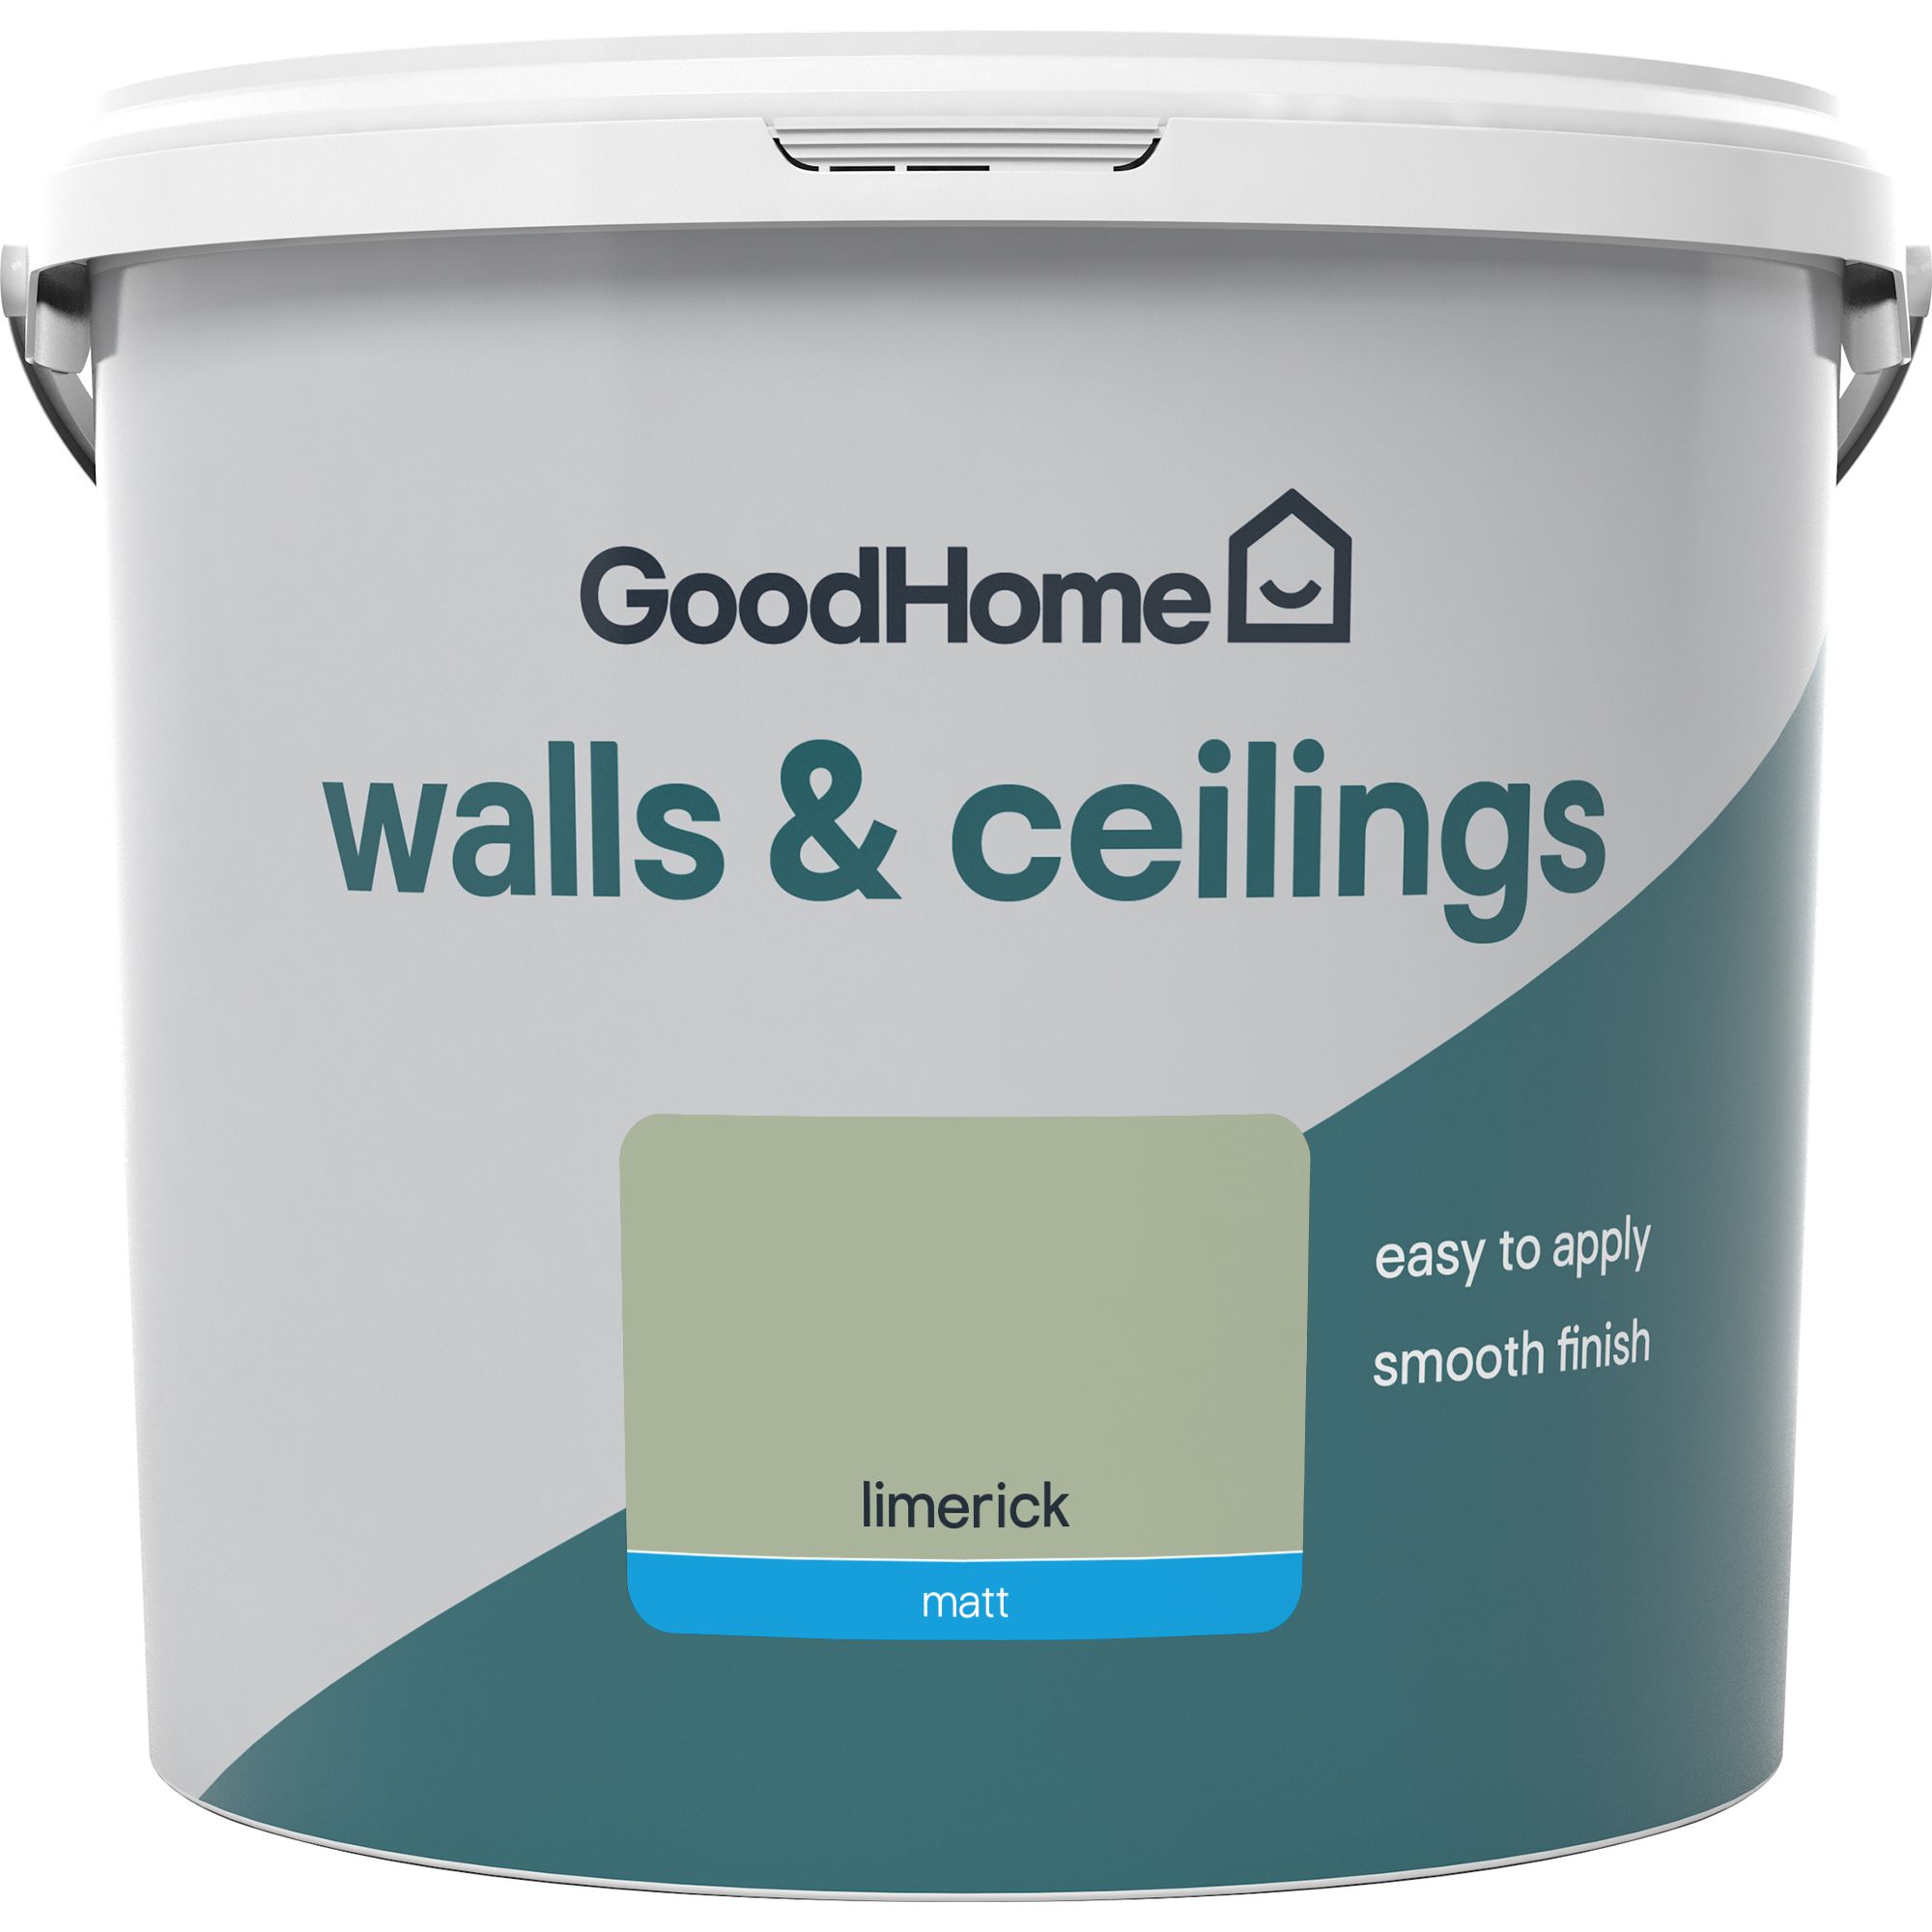 GoodHome Walls & ceilings Limerick Matt Emulsion paint, 5L